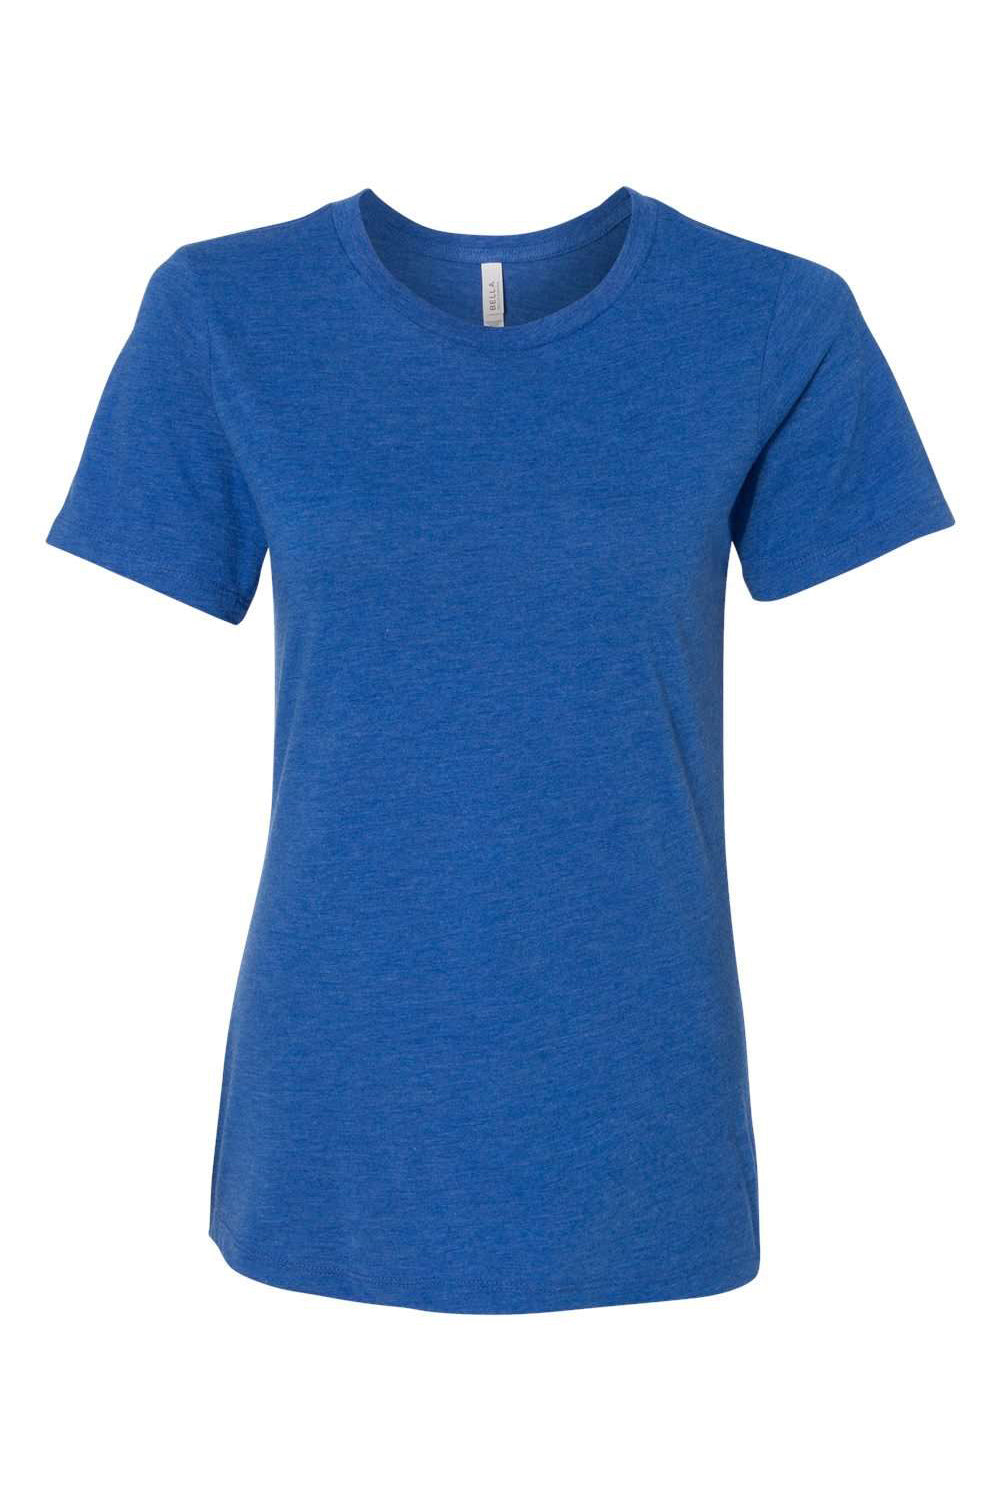 Bella + Canvas BC6413 Womens Short Sleeve Crewneck T-Shirt True Royal Blue Flat Front